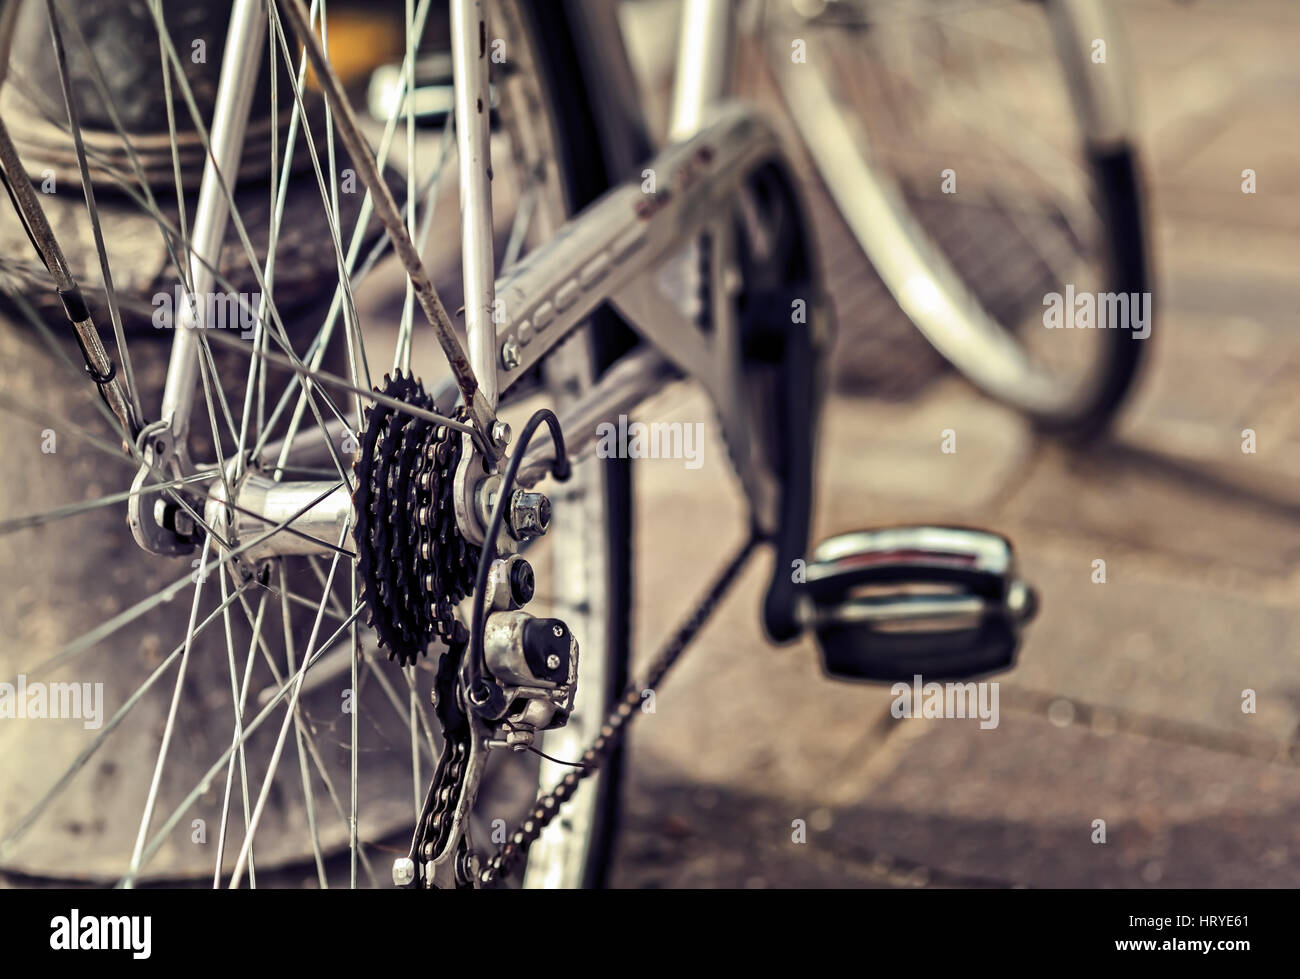 Fahrrad. Selektiven Fokus auf Kette und Getriebe. Hinteren Getriebe und Fahrrad-Kette. Stockfoto